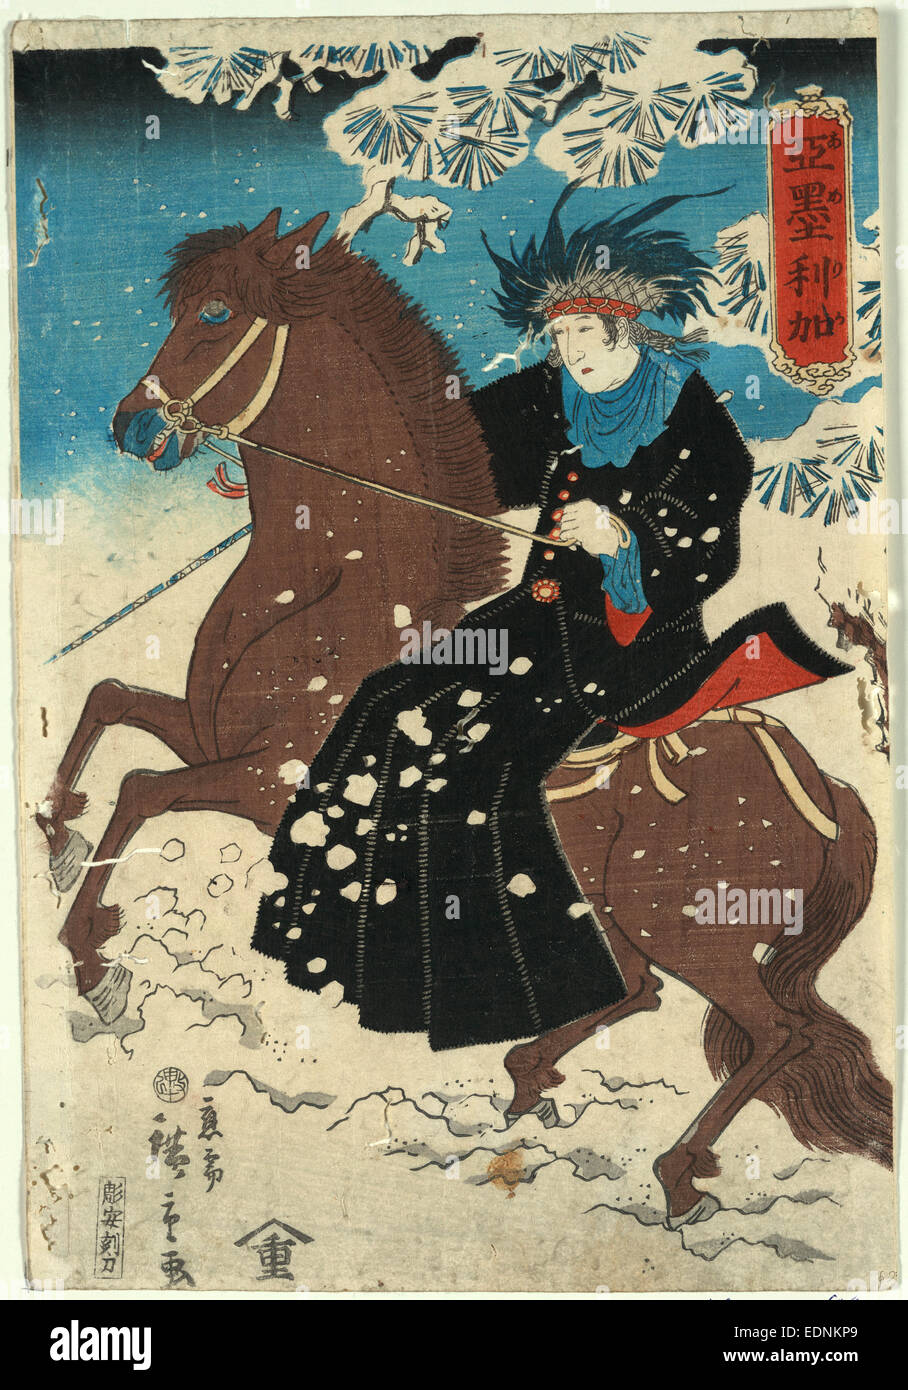 Amerika, America., Utagawa, Hiroshige, 1826?-1869, artist, 1860., 1 print : woodcut, color ; 35.5 x 24.2 cm., Print shows a woman, representating America, riding sidesaddle on a horse in a snowy landscape. Stock Photo